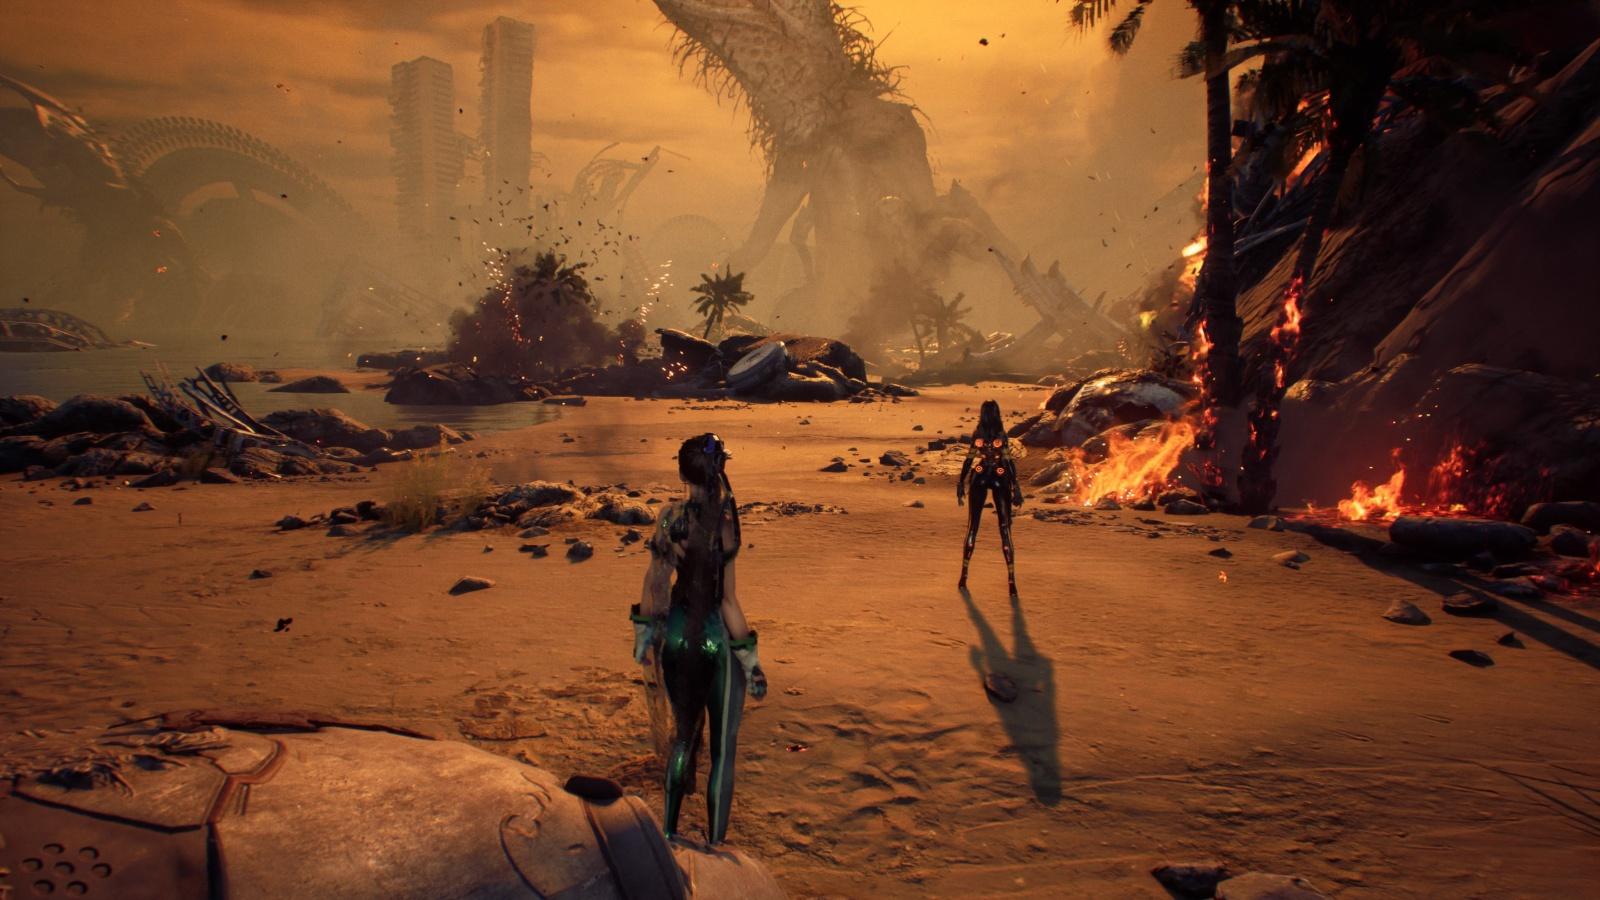 A screenshot from the game Stellar Blade